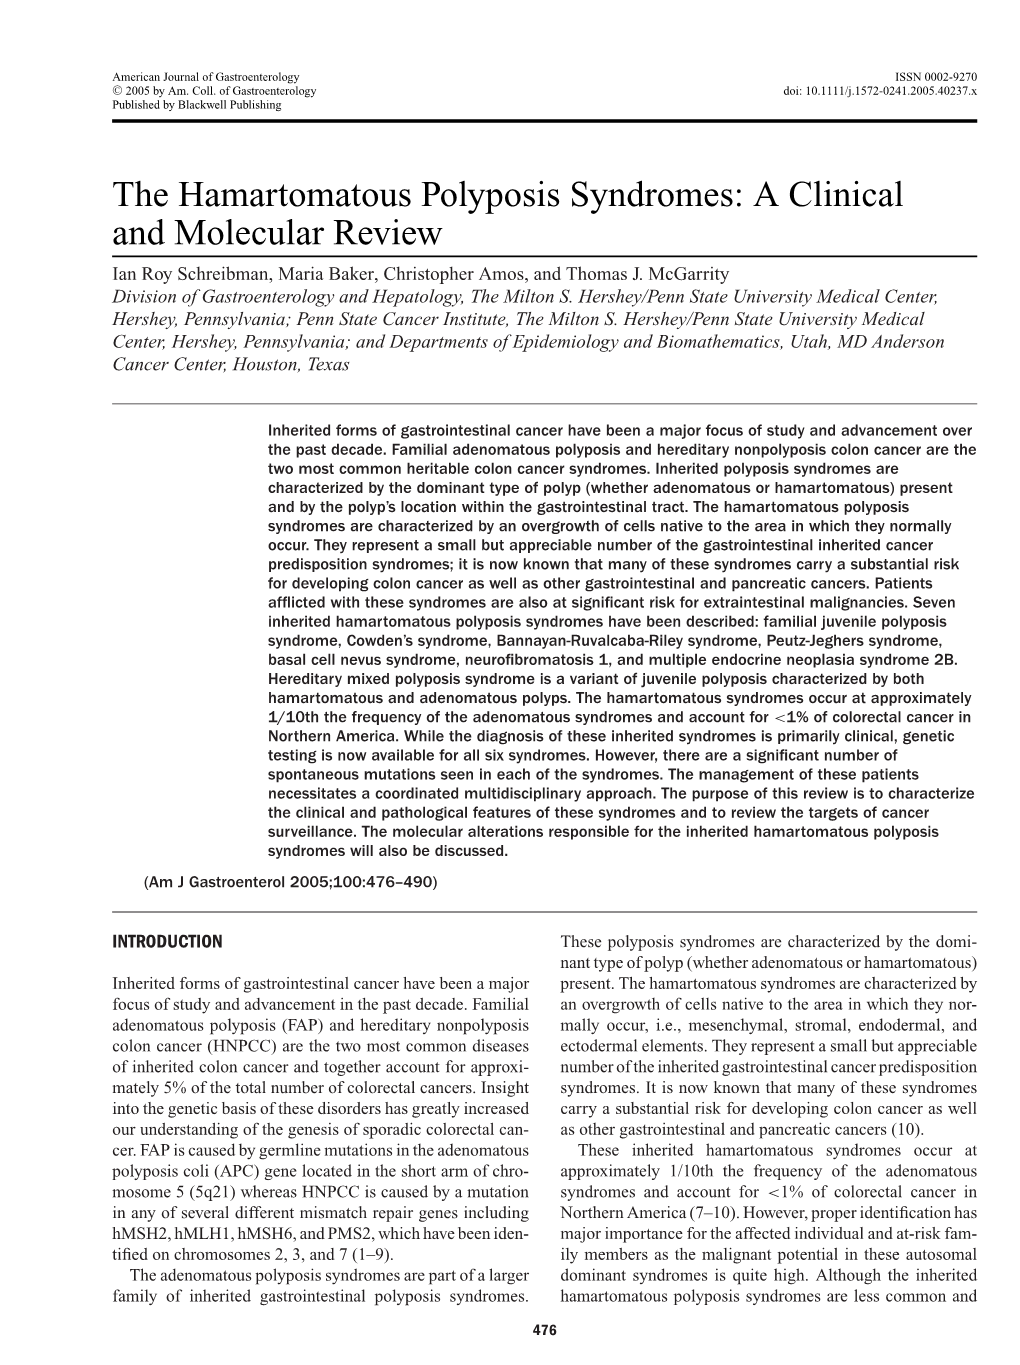 The Hamartomatous Polyposis Syndromes: a Clinical and Molecular Review Ian Roy Schreibman, Maria Baker, Christopher Amos, and Thomas J